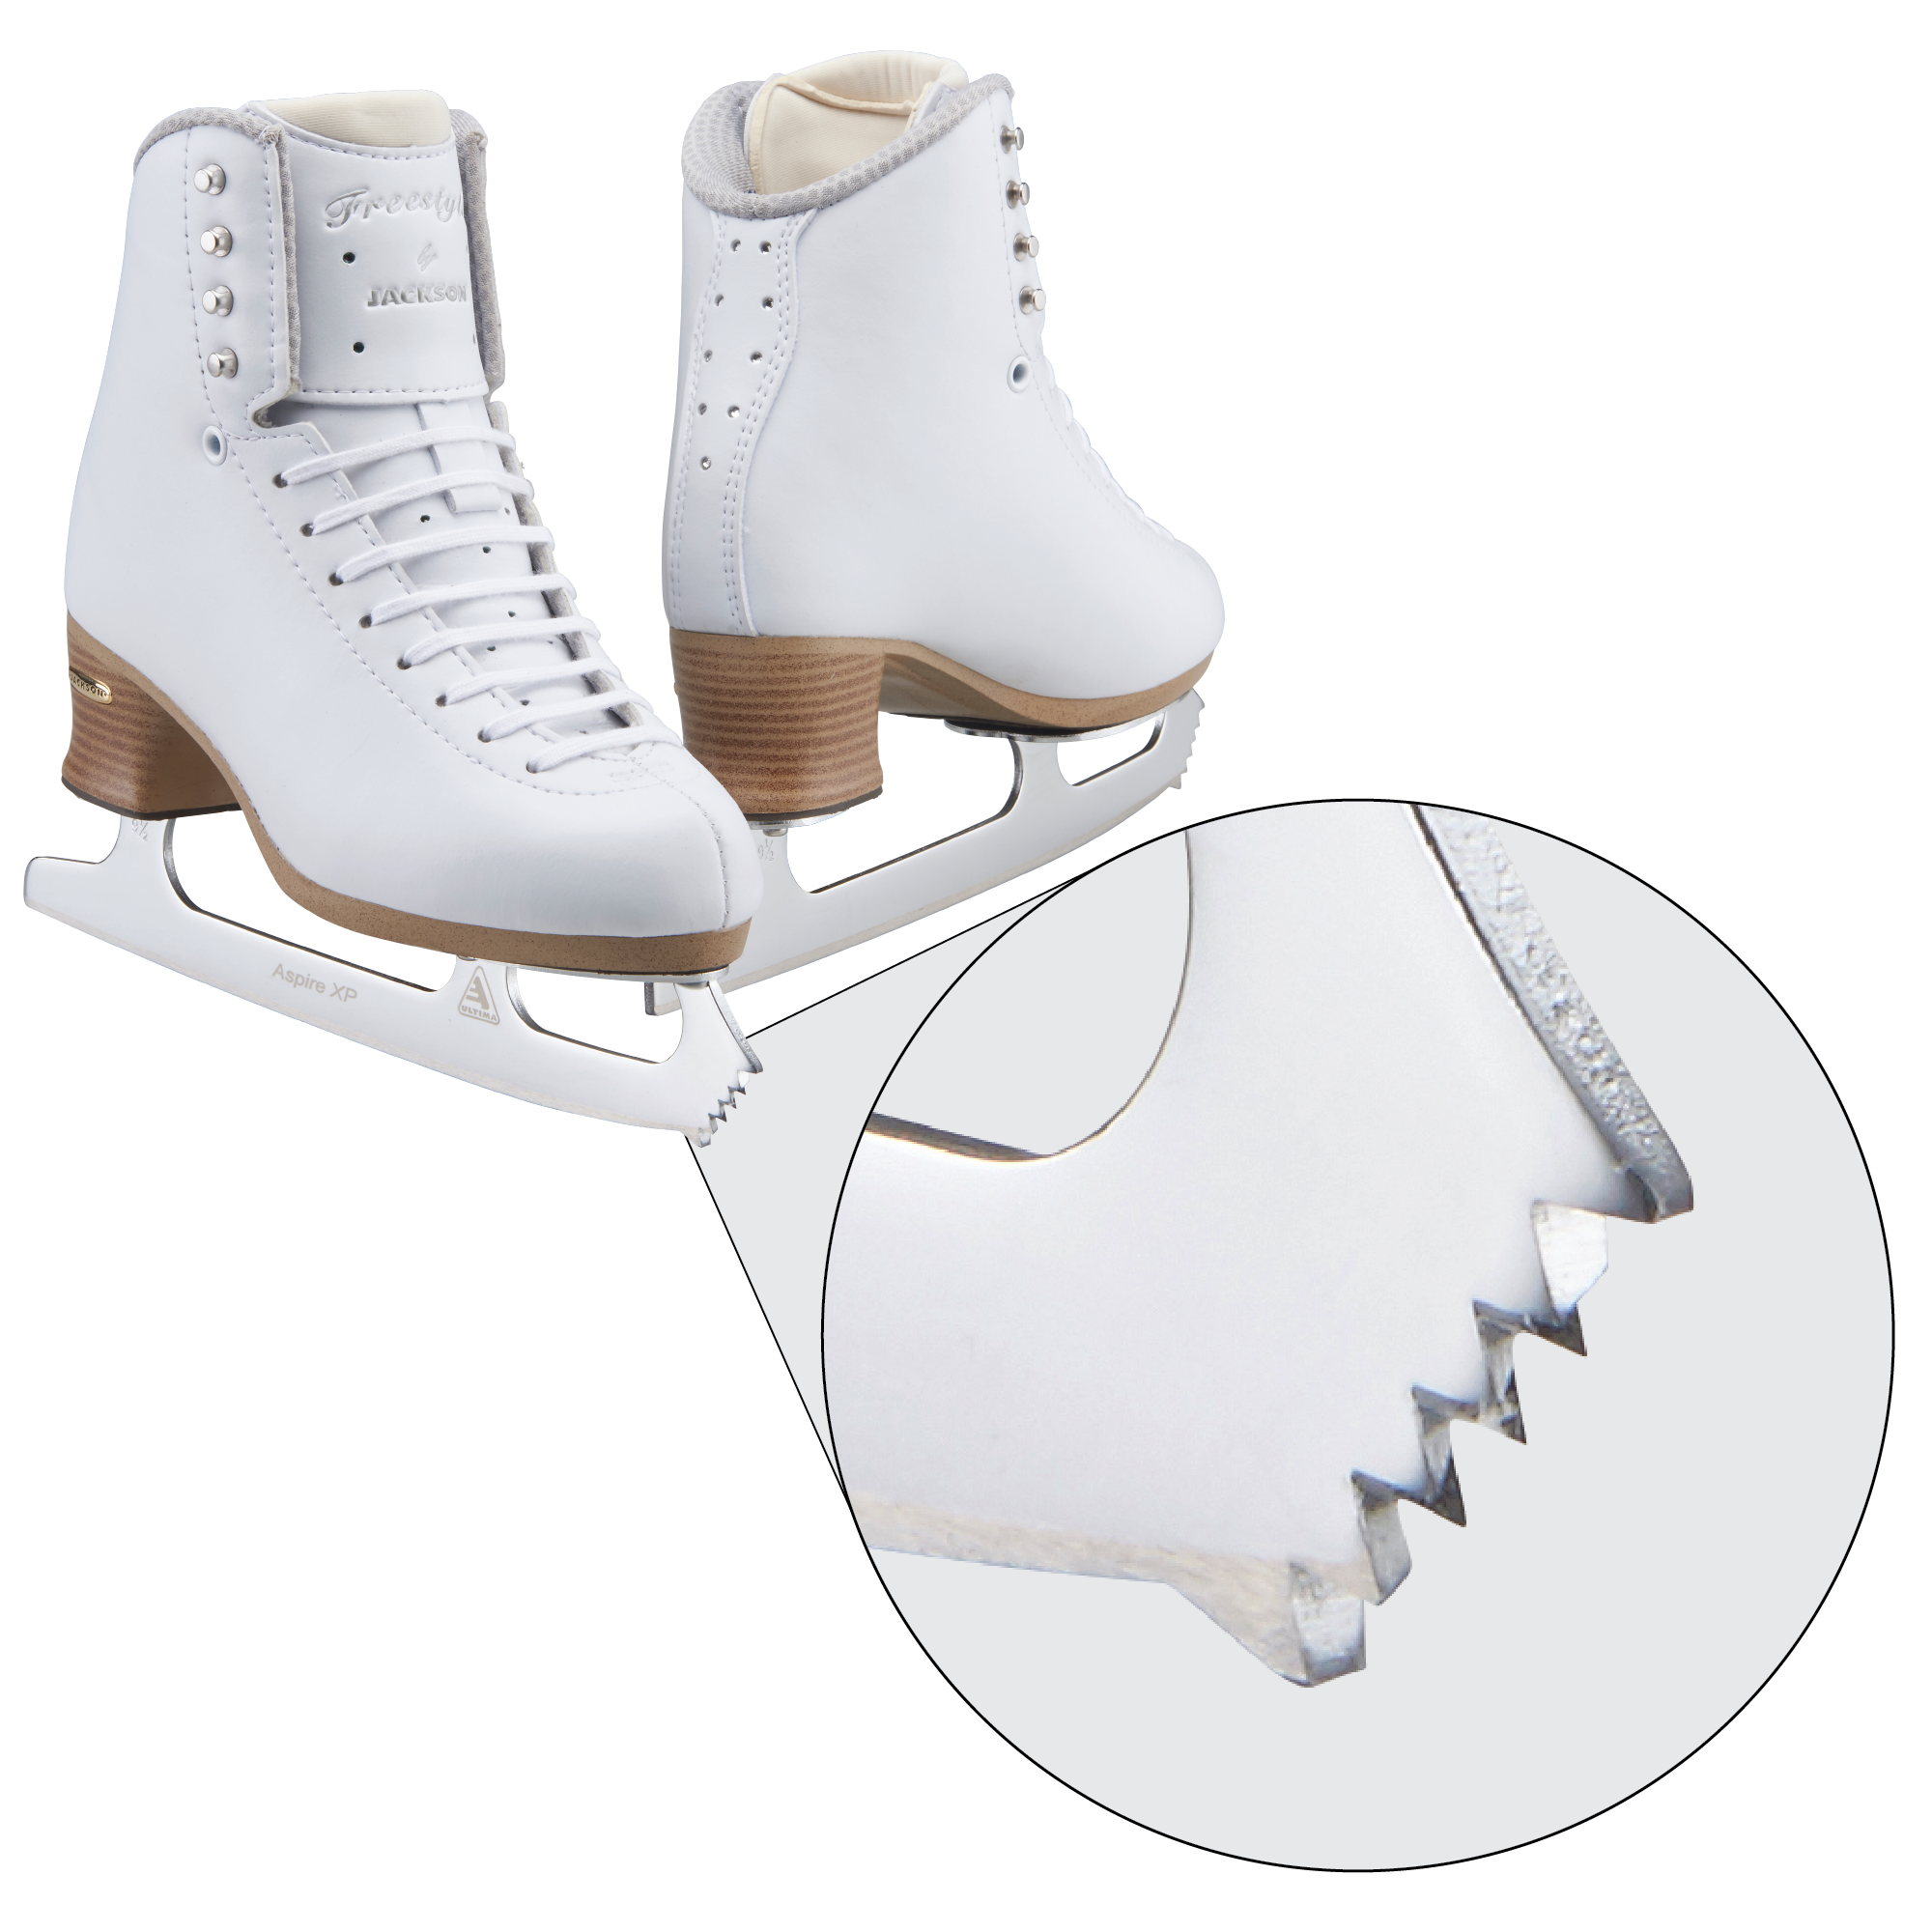 Jackson Skates